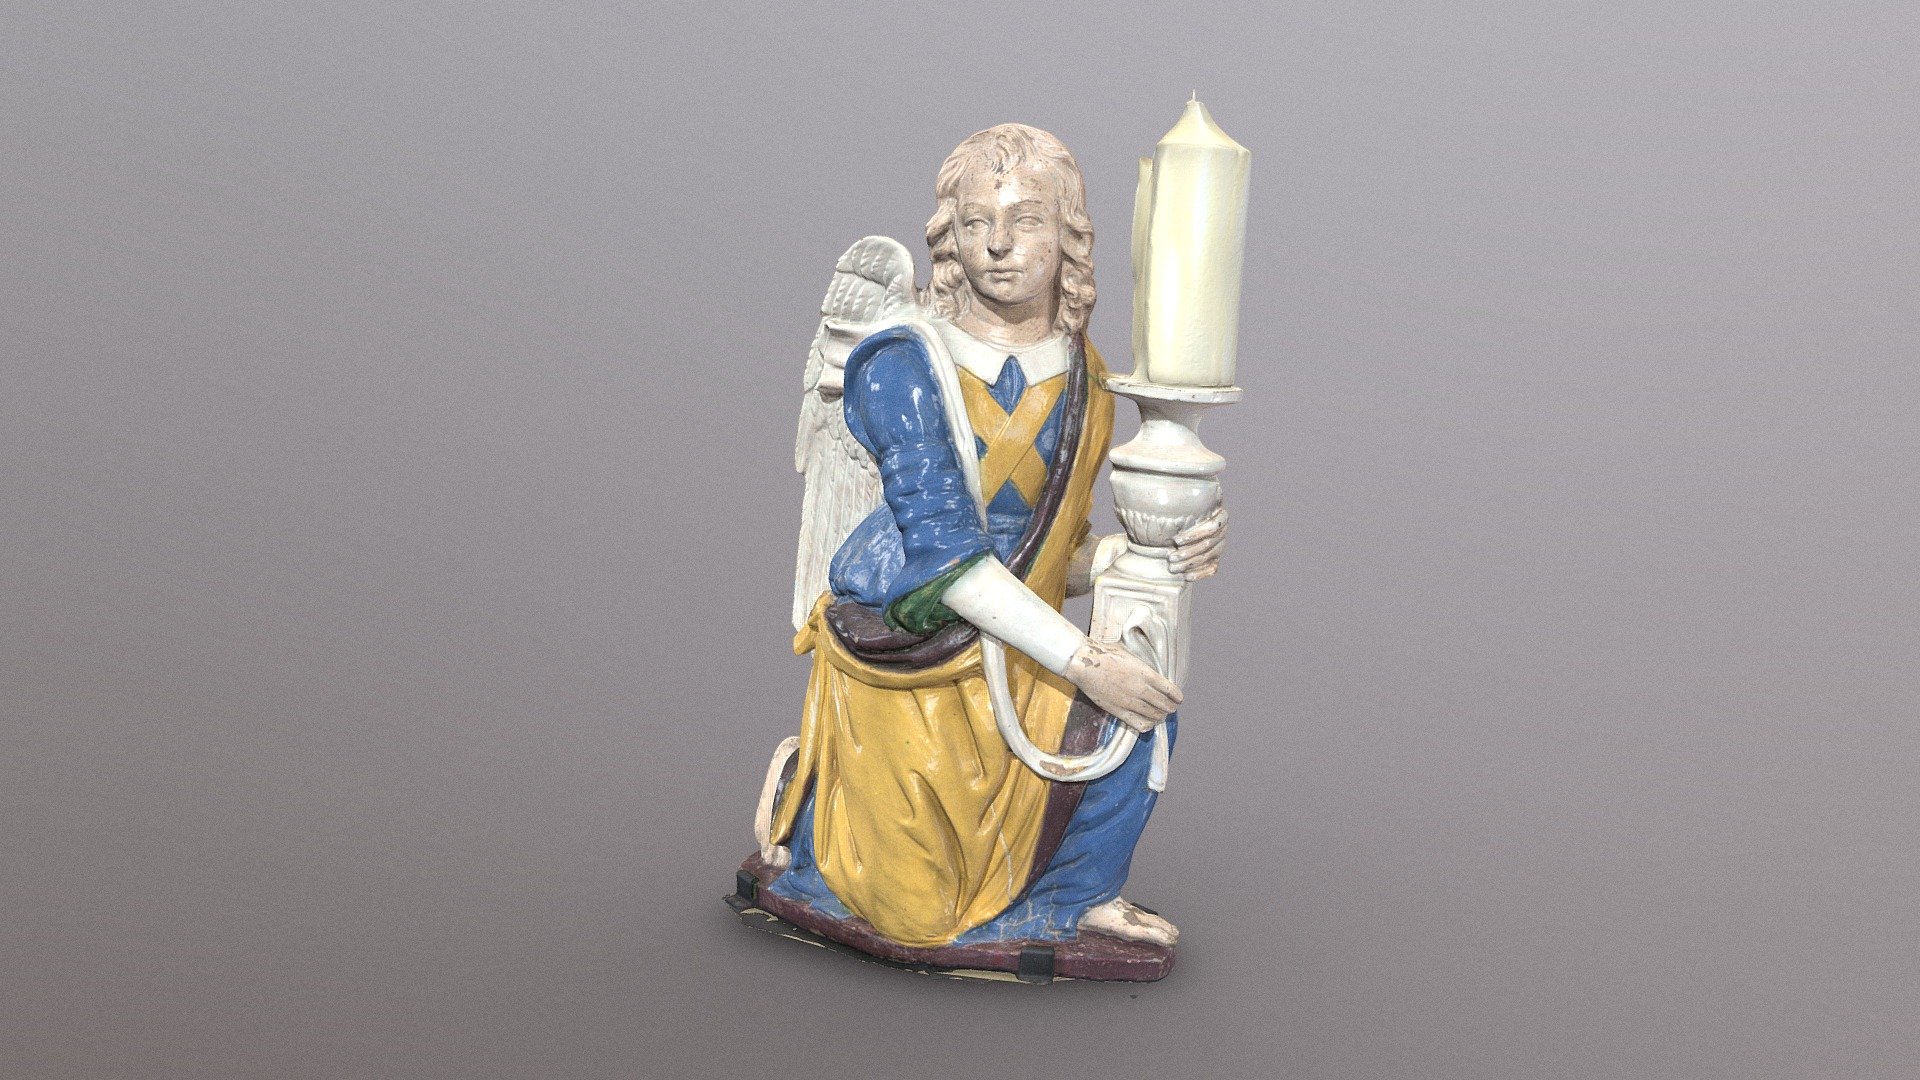 Kneeling angel holding a candlestick